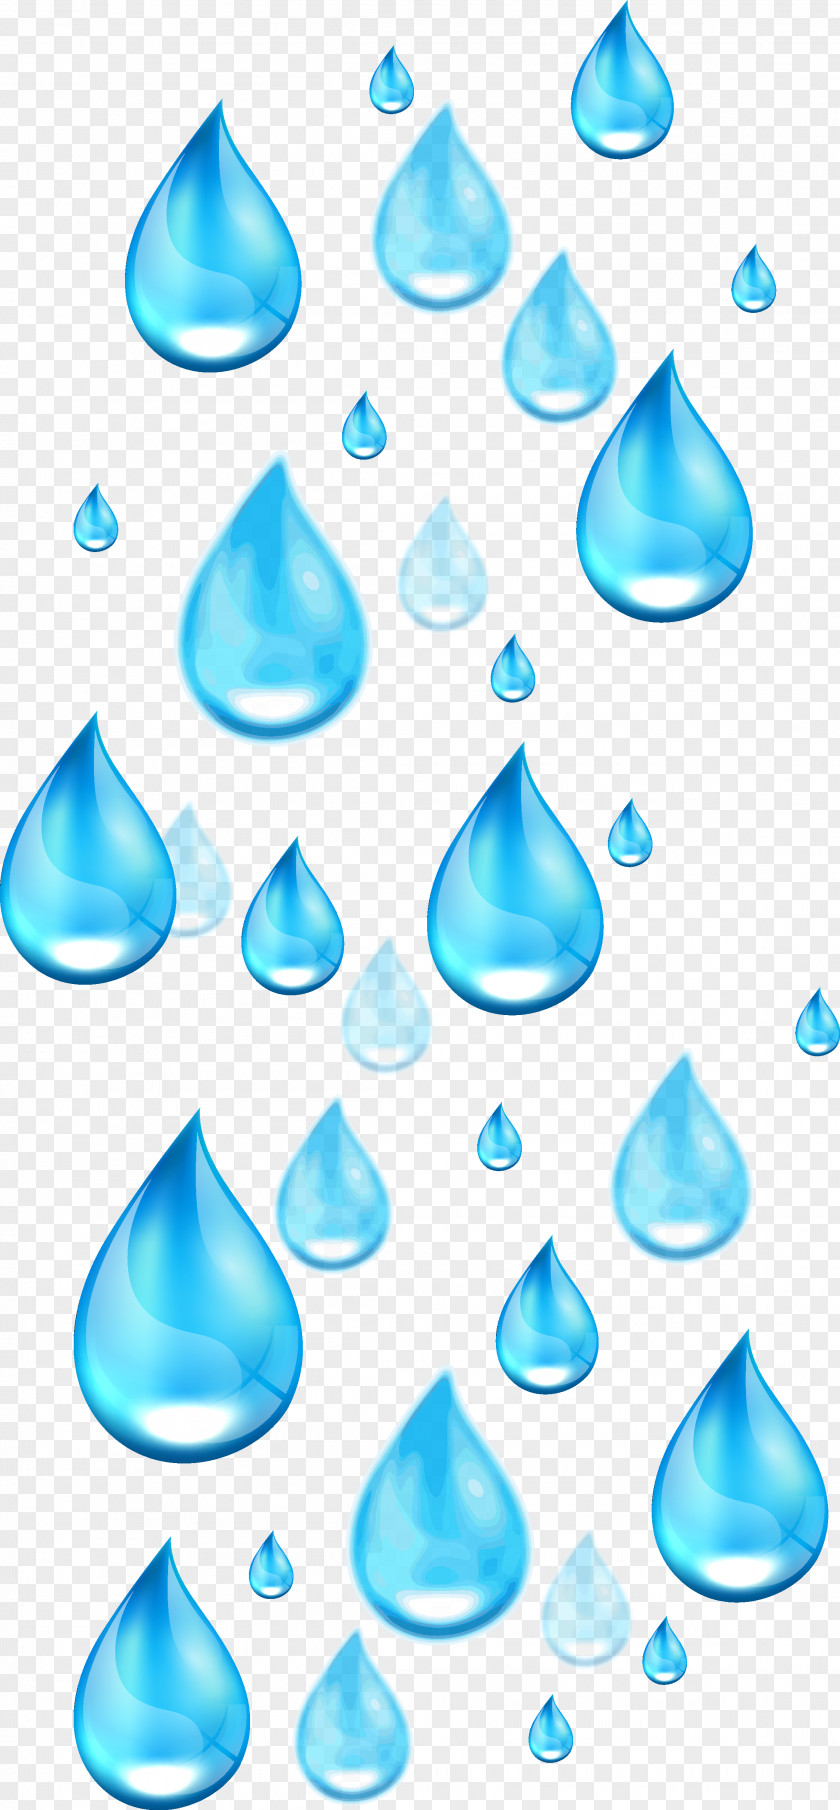 Blue Water Drop Euclidean Vector Illustration PNG